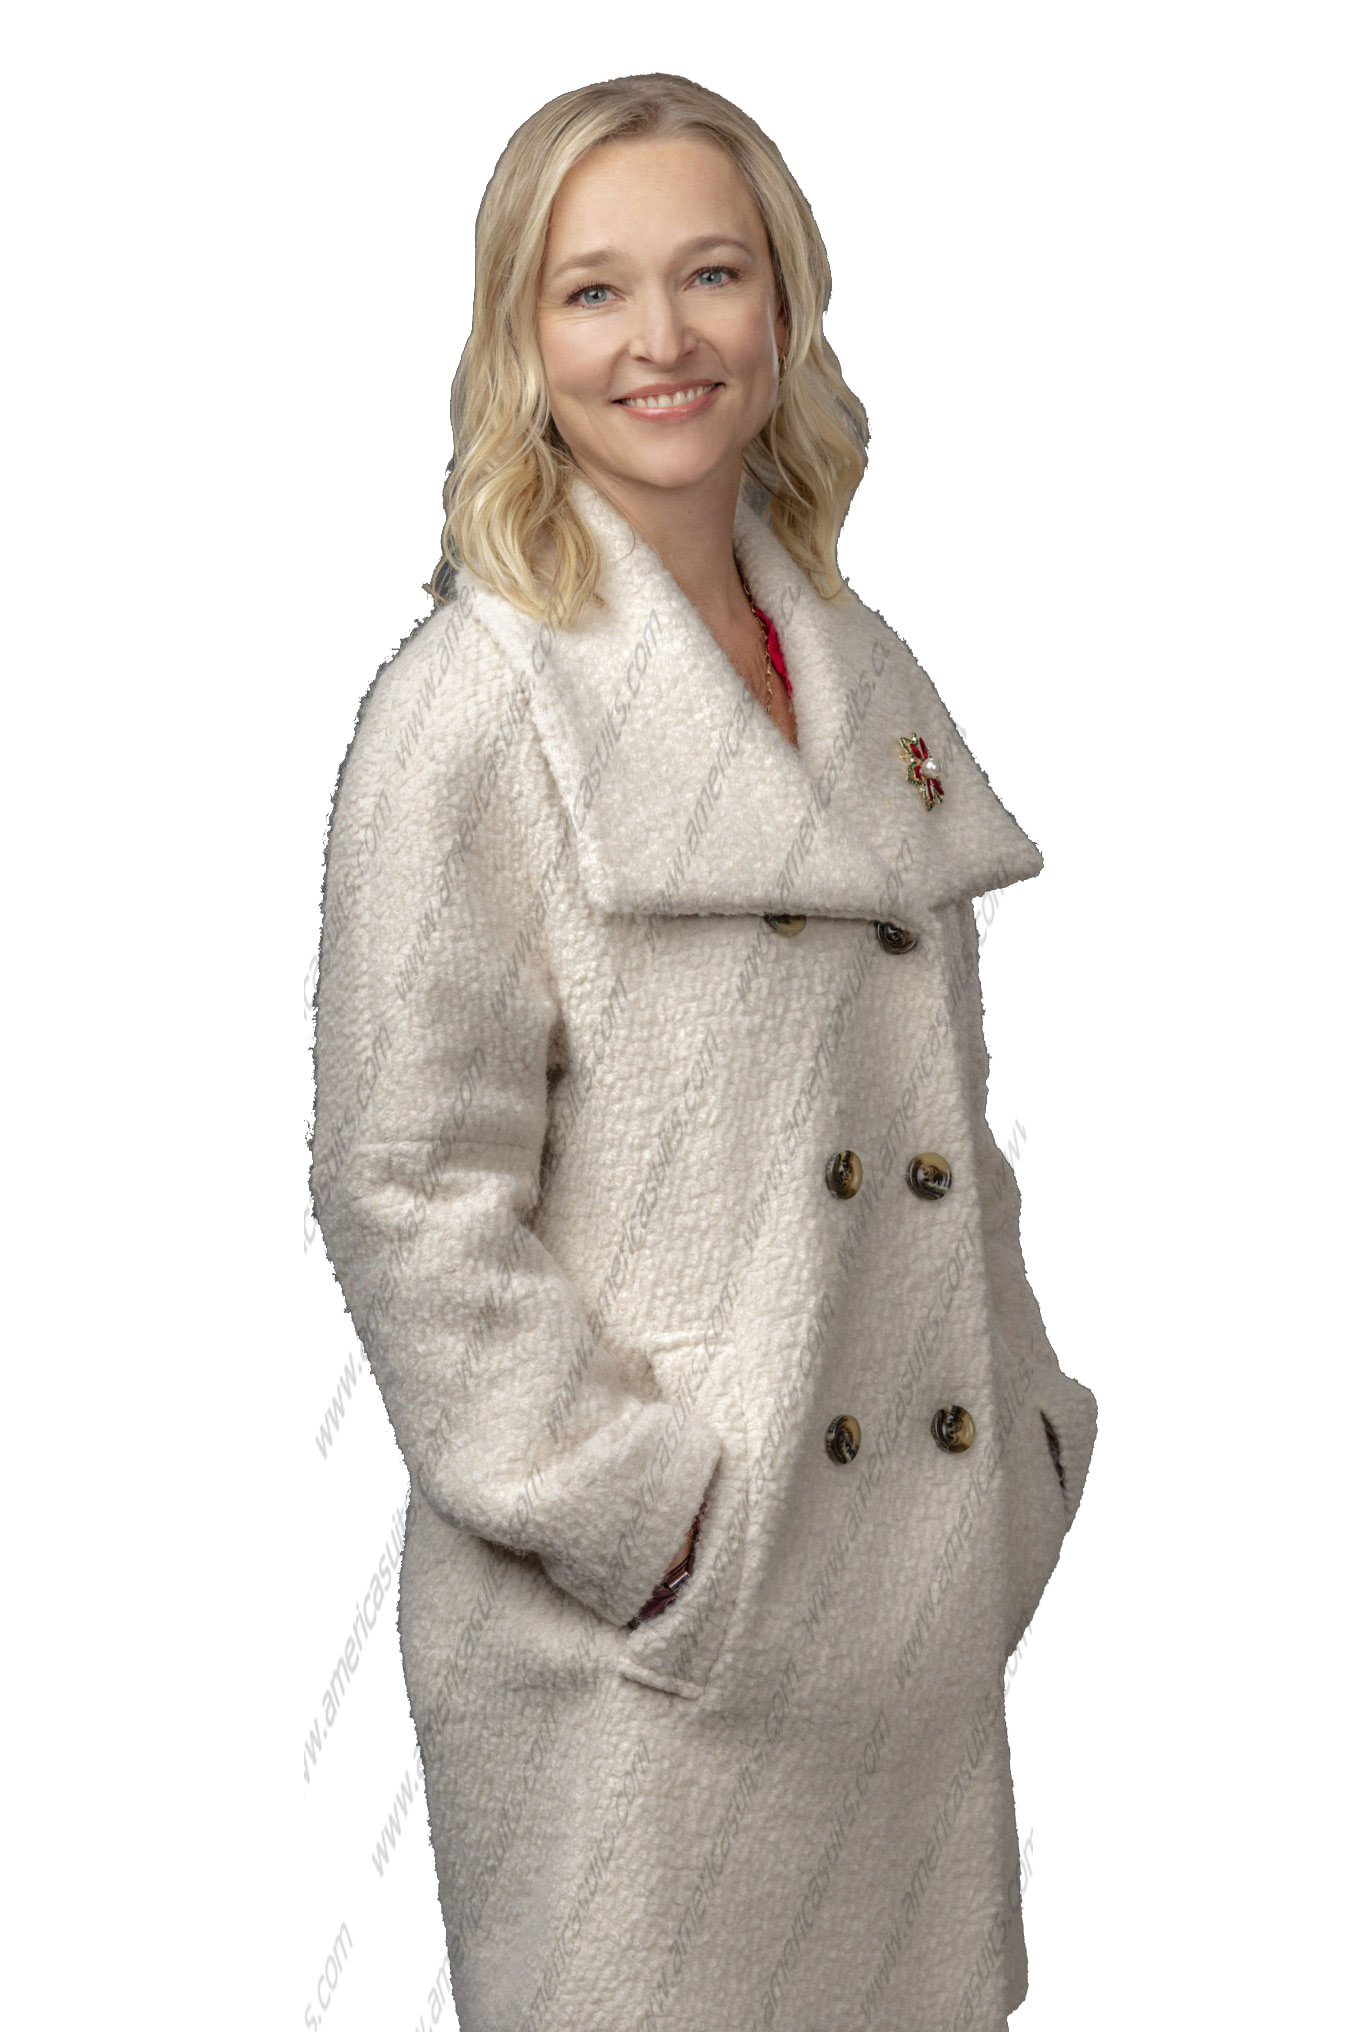 Return to Christmas Creek Kari Matchett White Coat